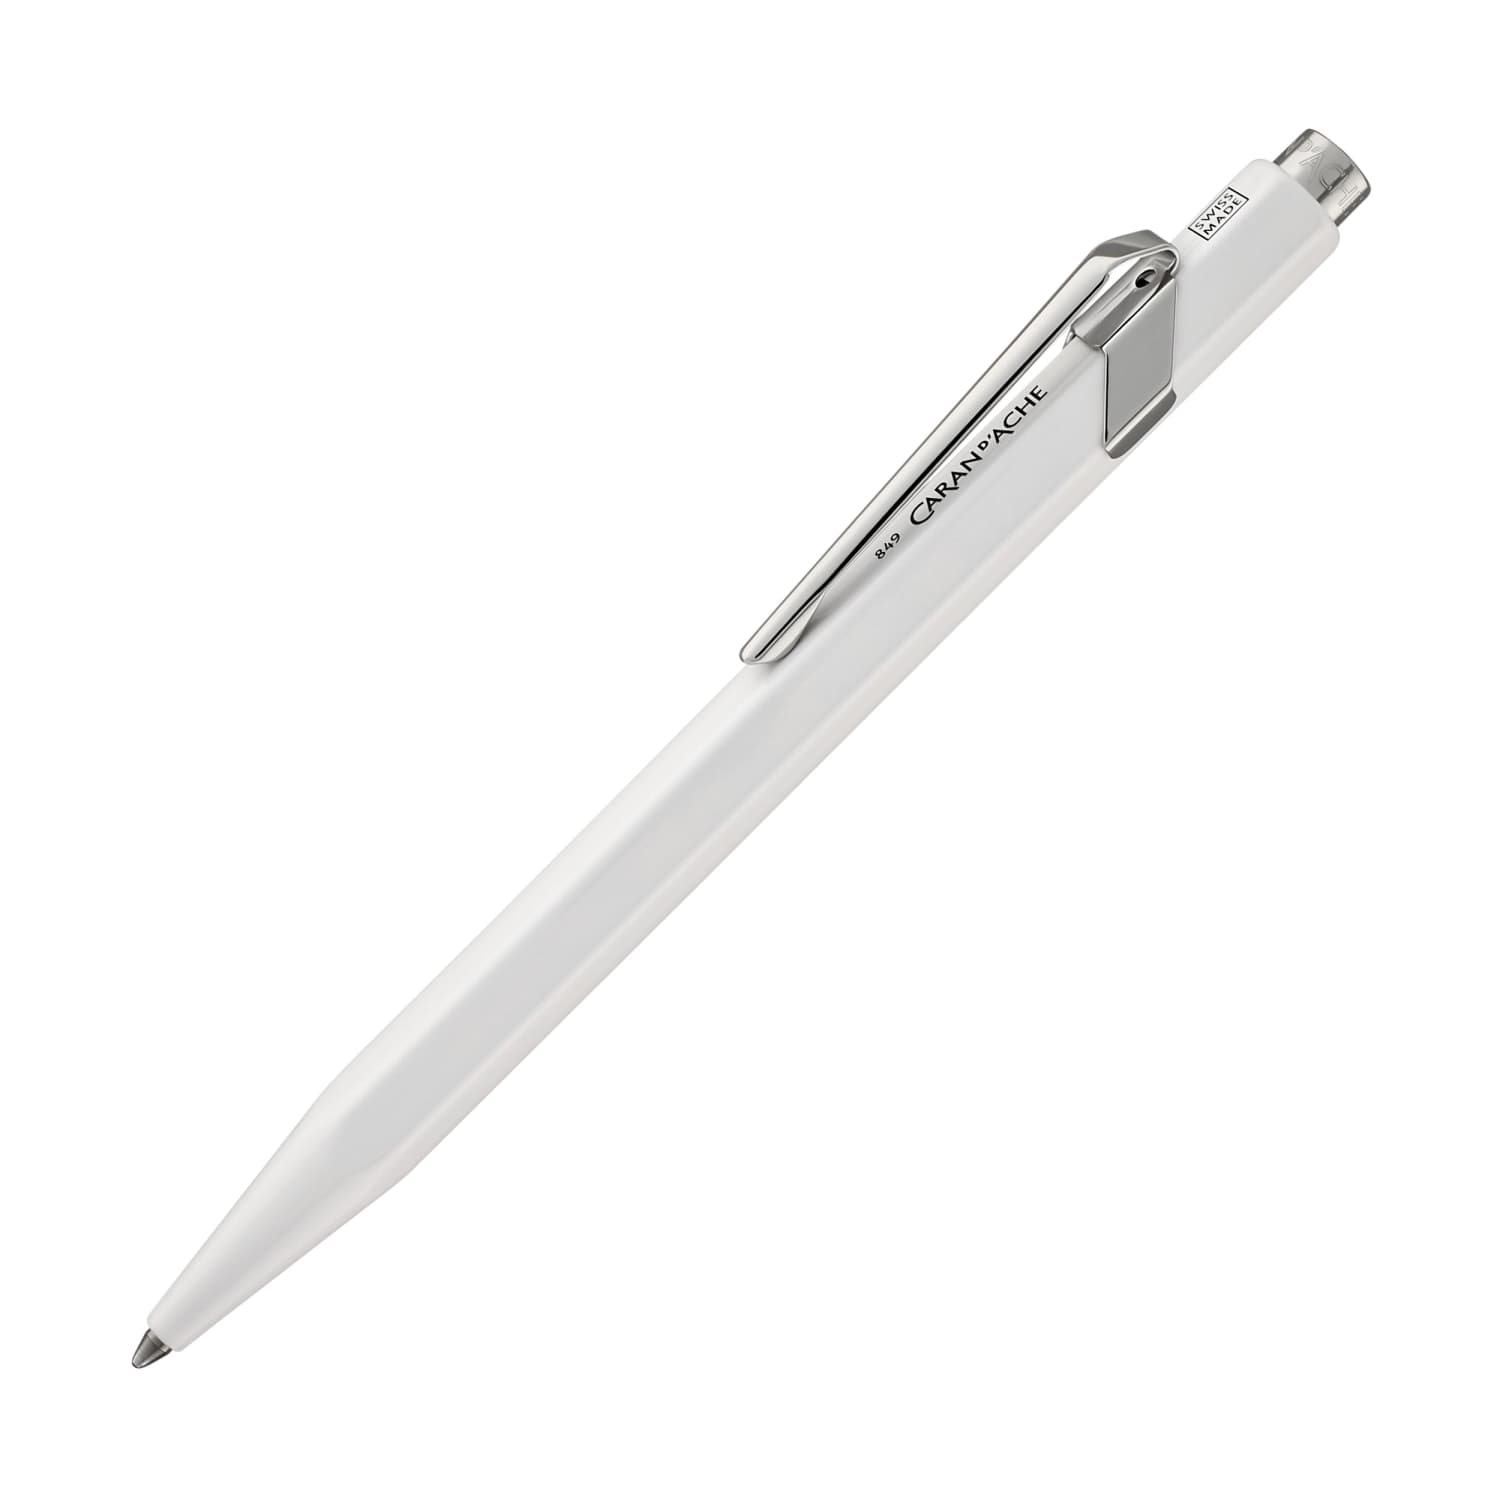 Caran d'Ache 849 Metal Collection Ballpoint Pen in White